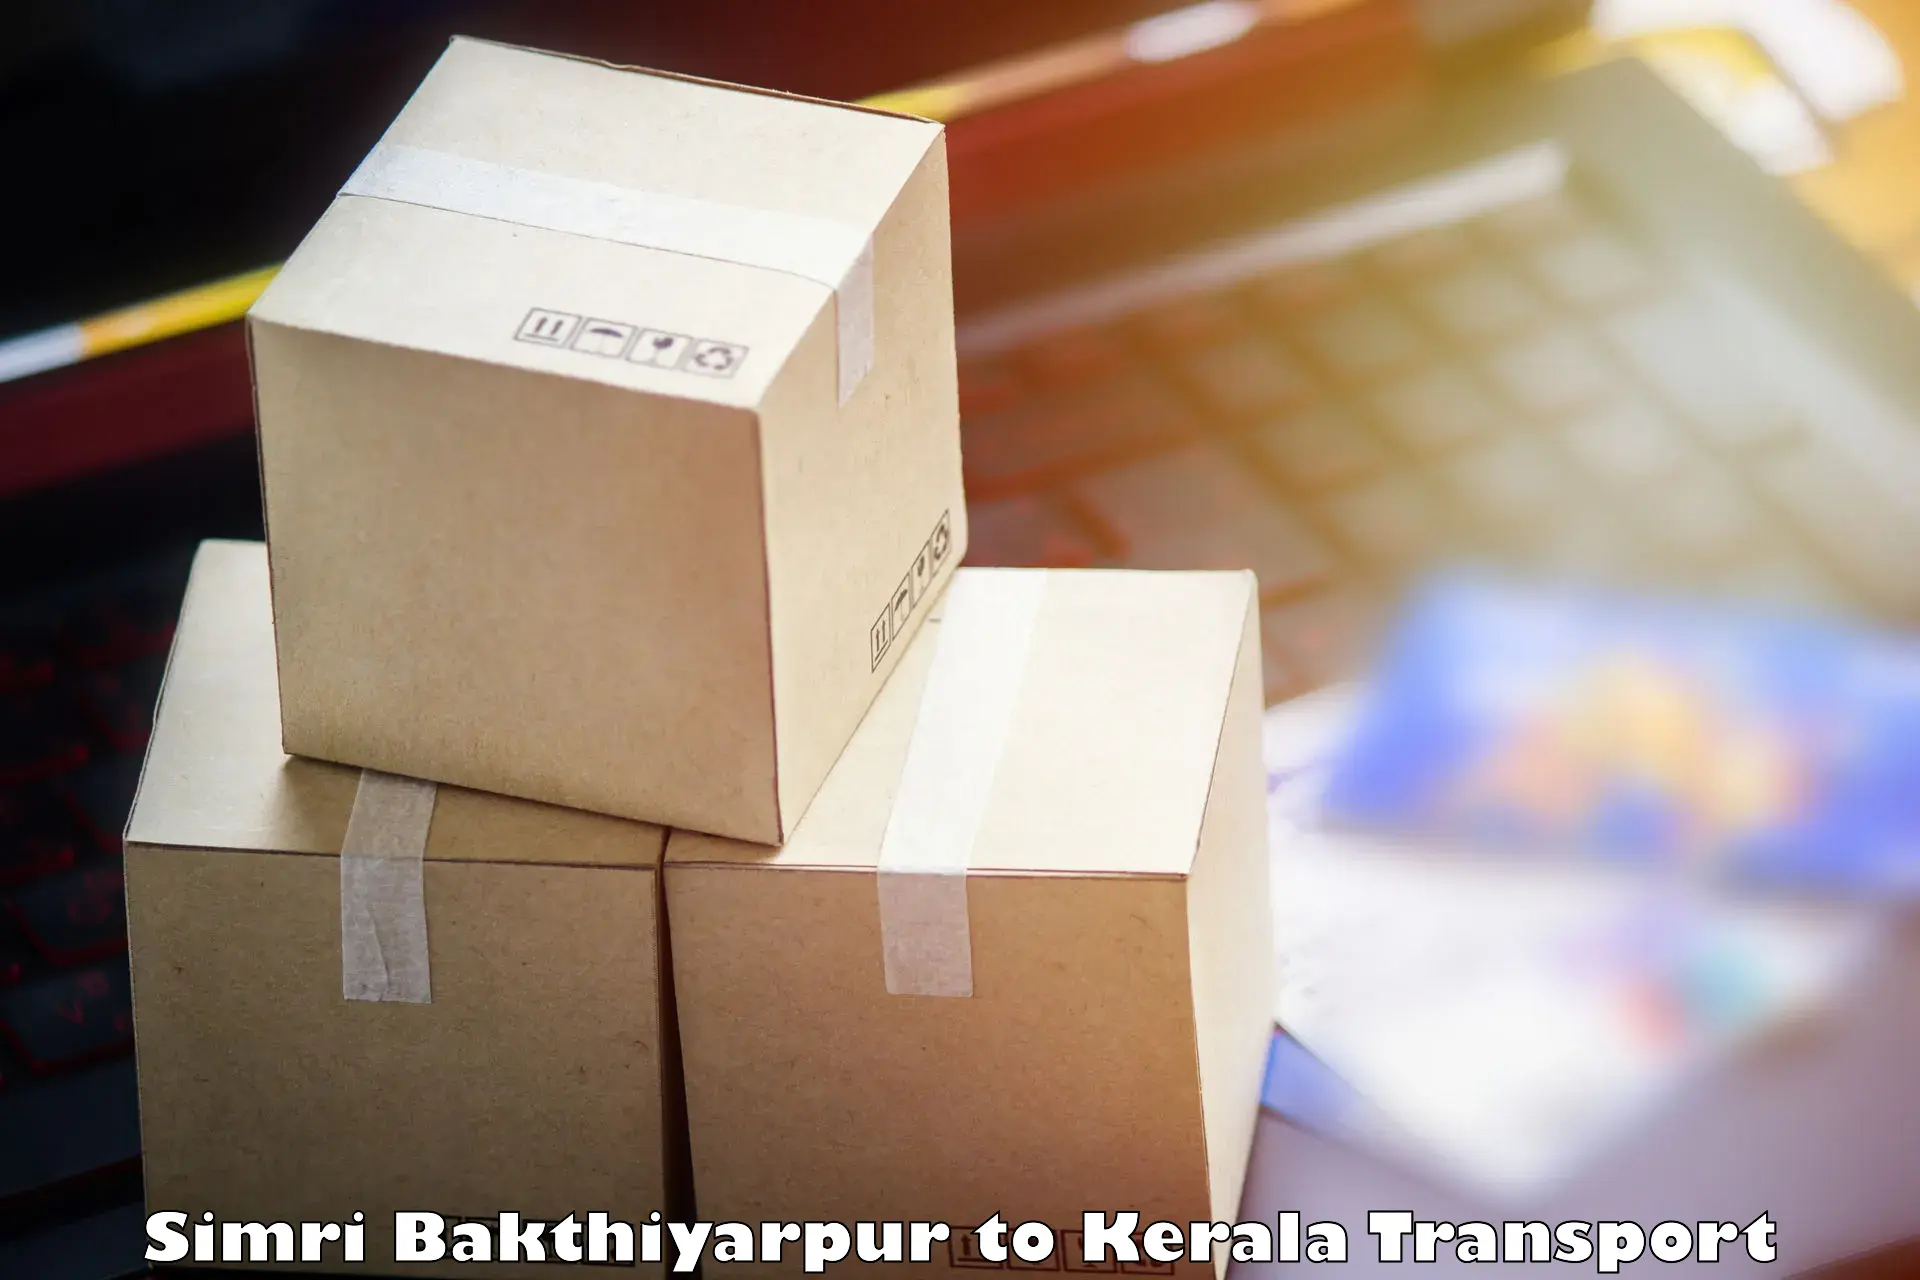 Pick up transport service Simri Bakthiyarpur to Thiruvananthapuram